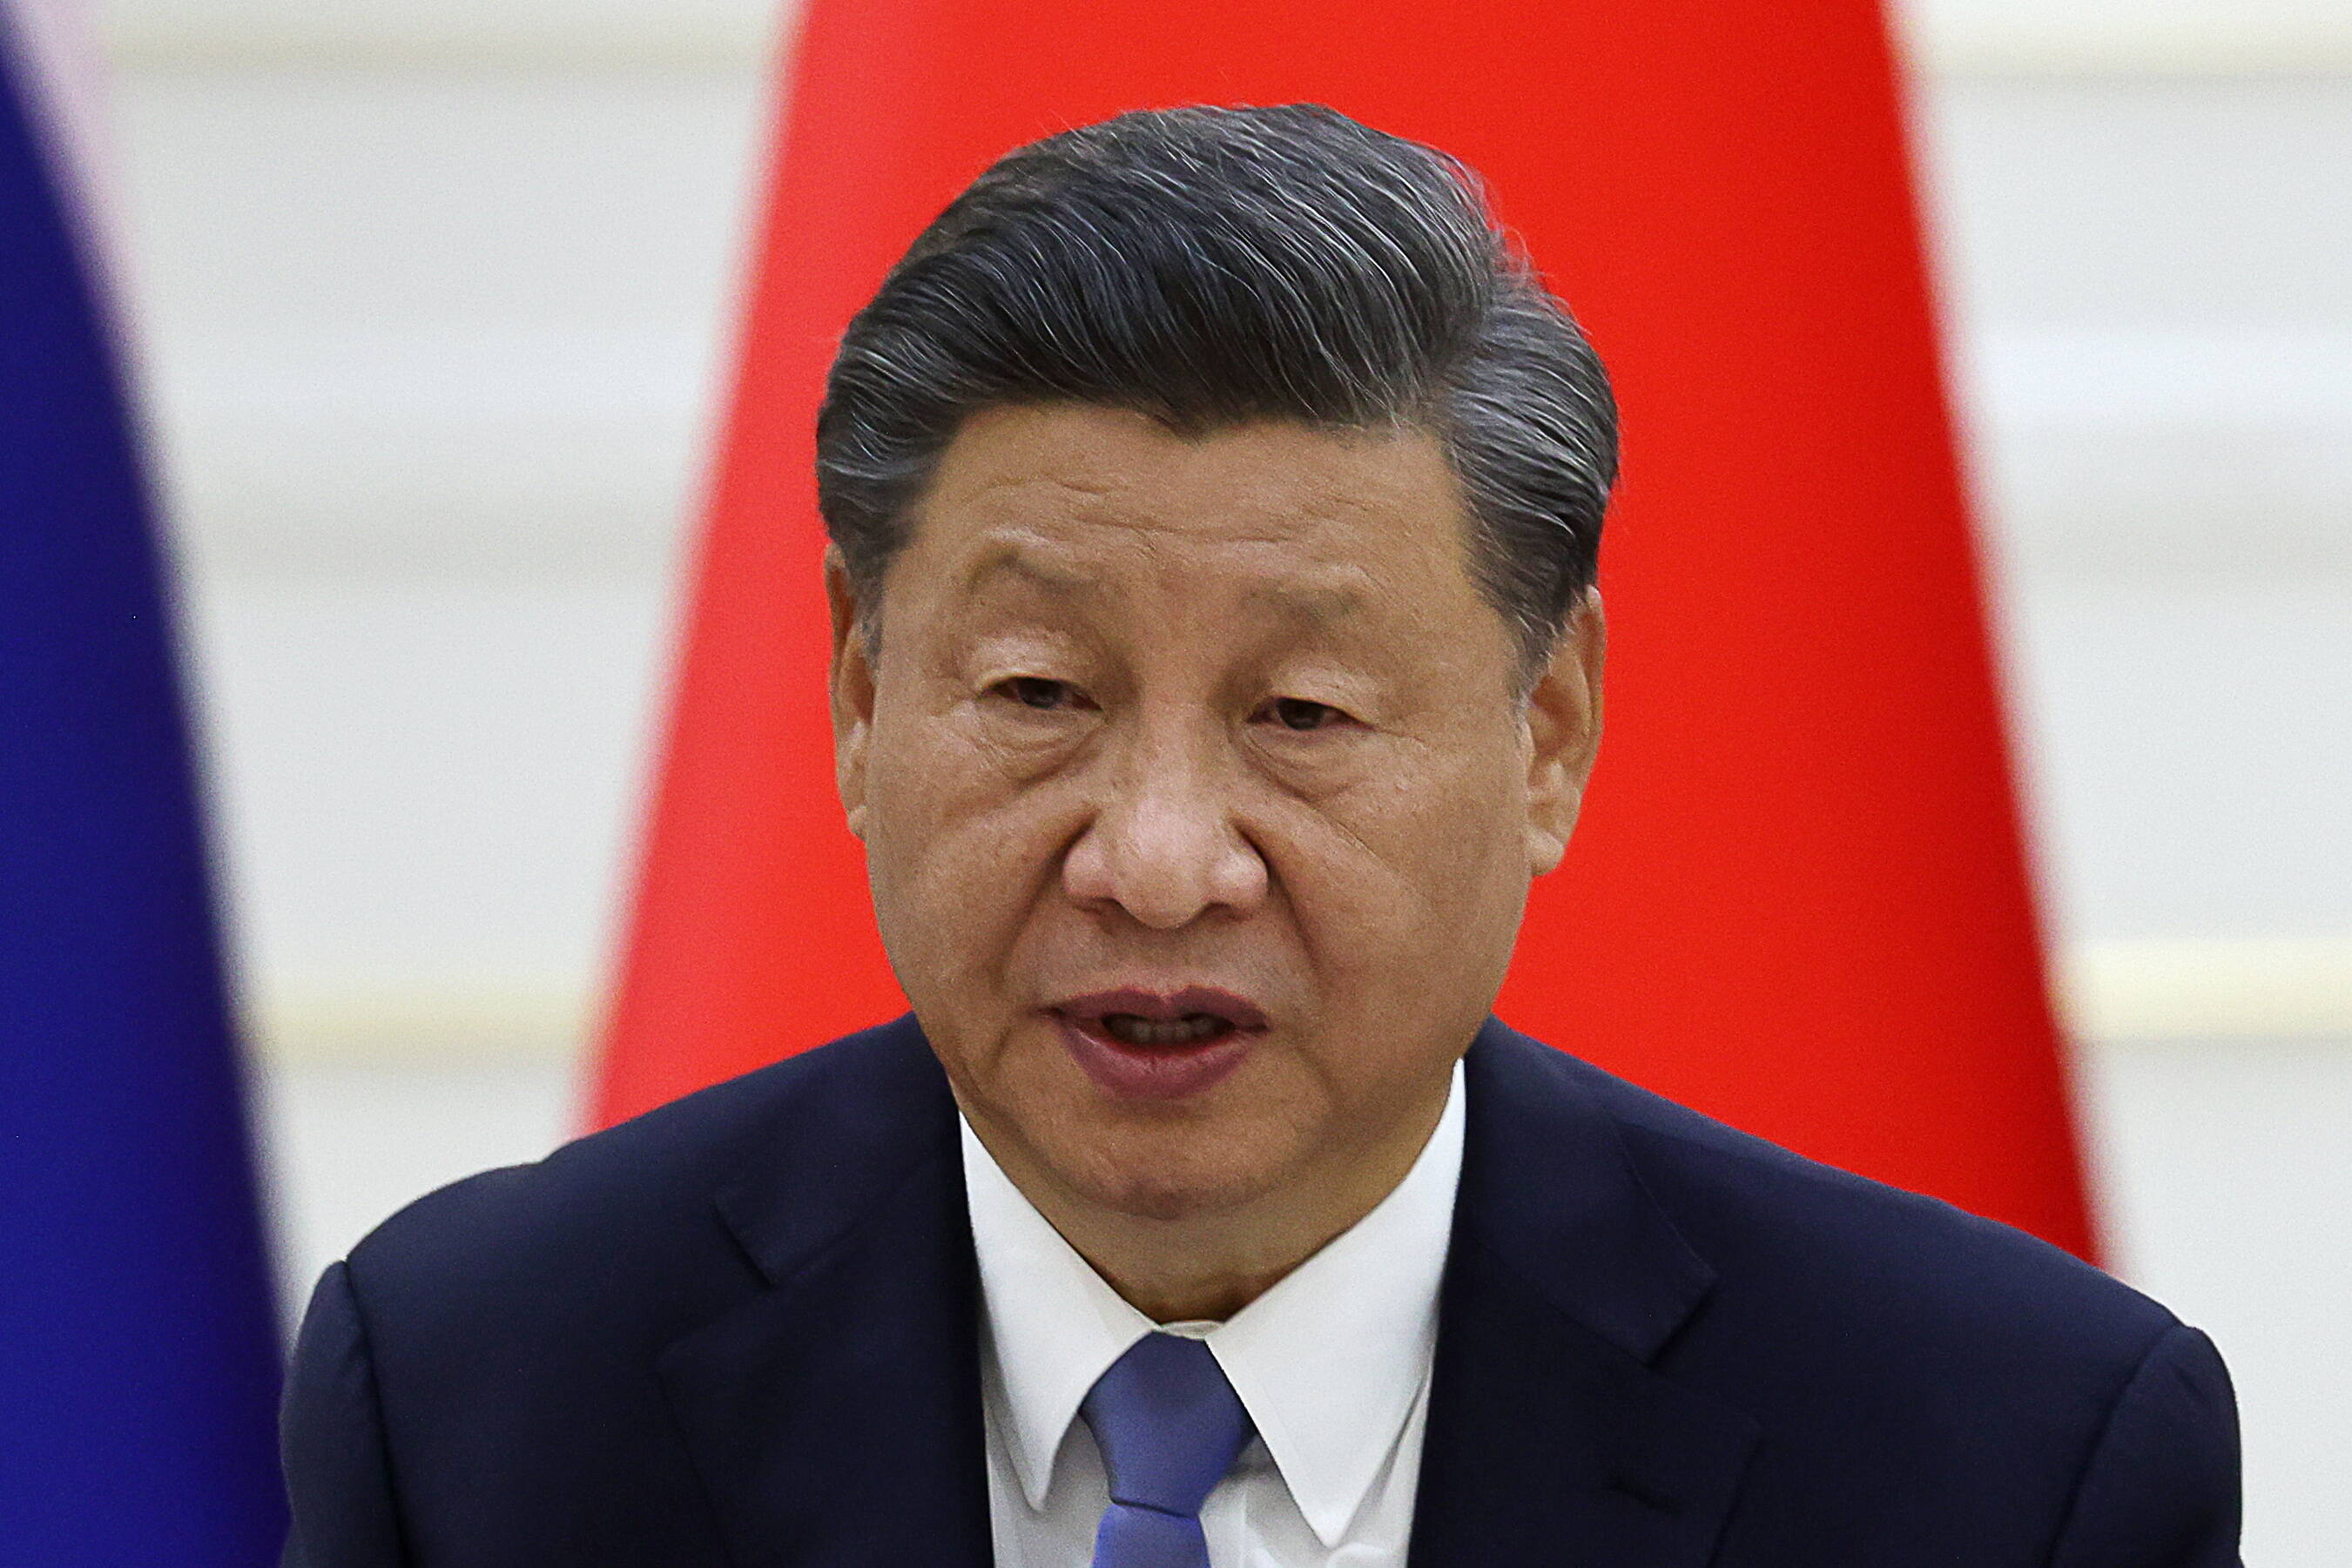 Revolution in China! Aufstand gegen Xi! Menschen rebellieren gegen Corona-Maßnahmen - tritt Xi zurück?